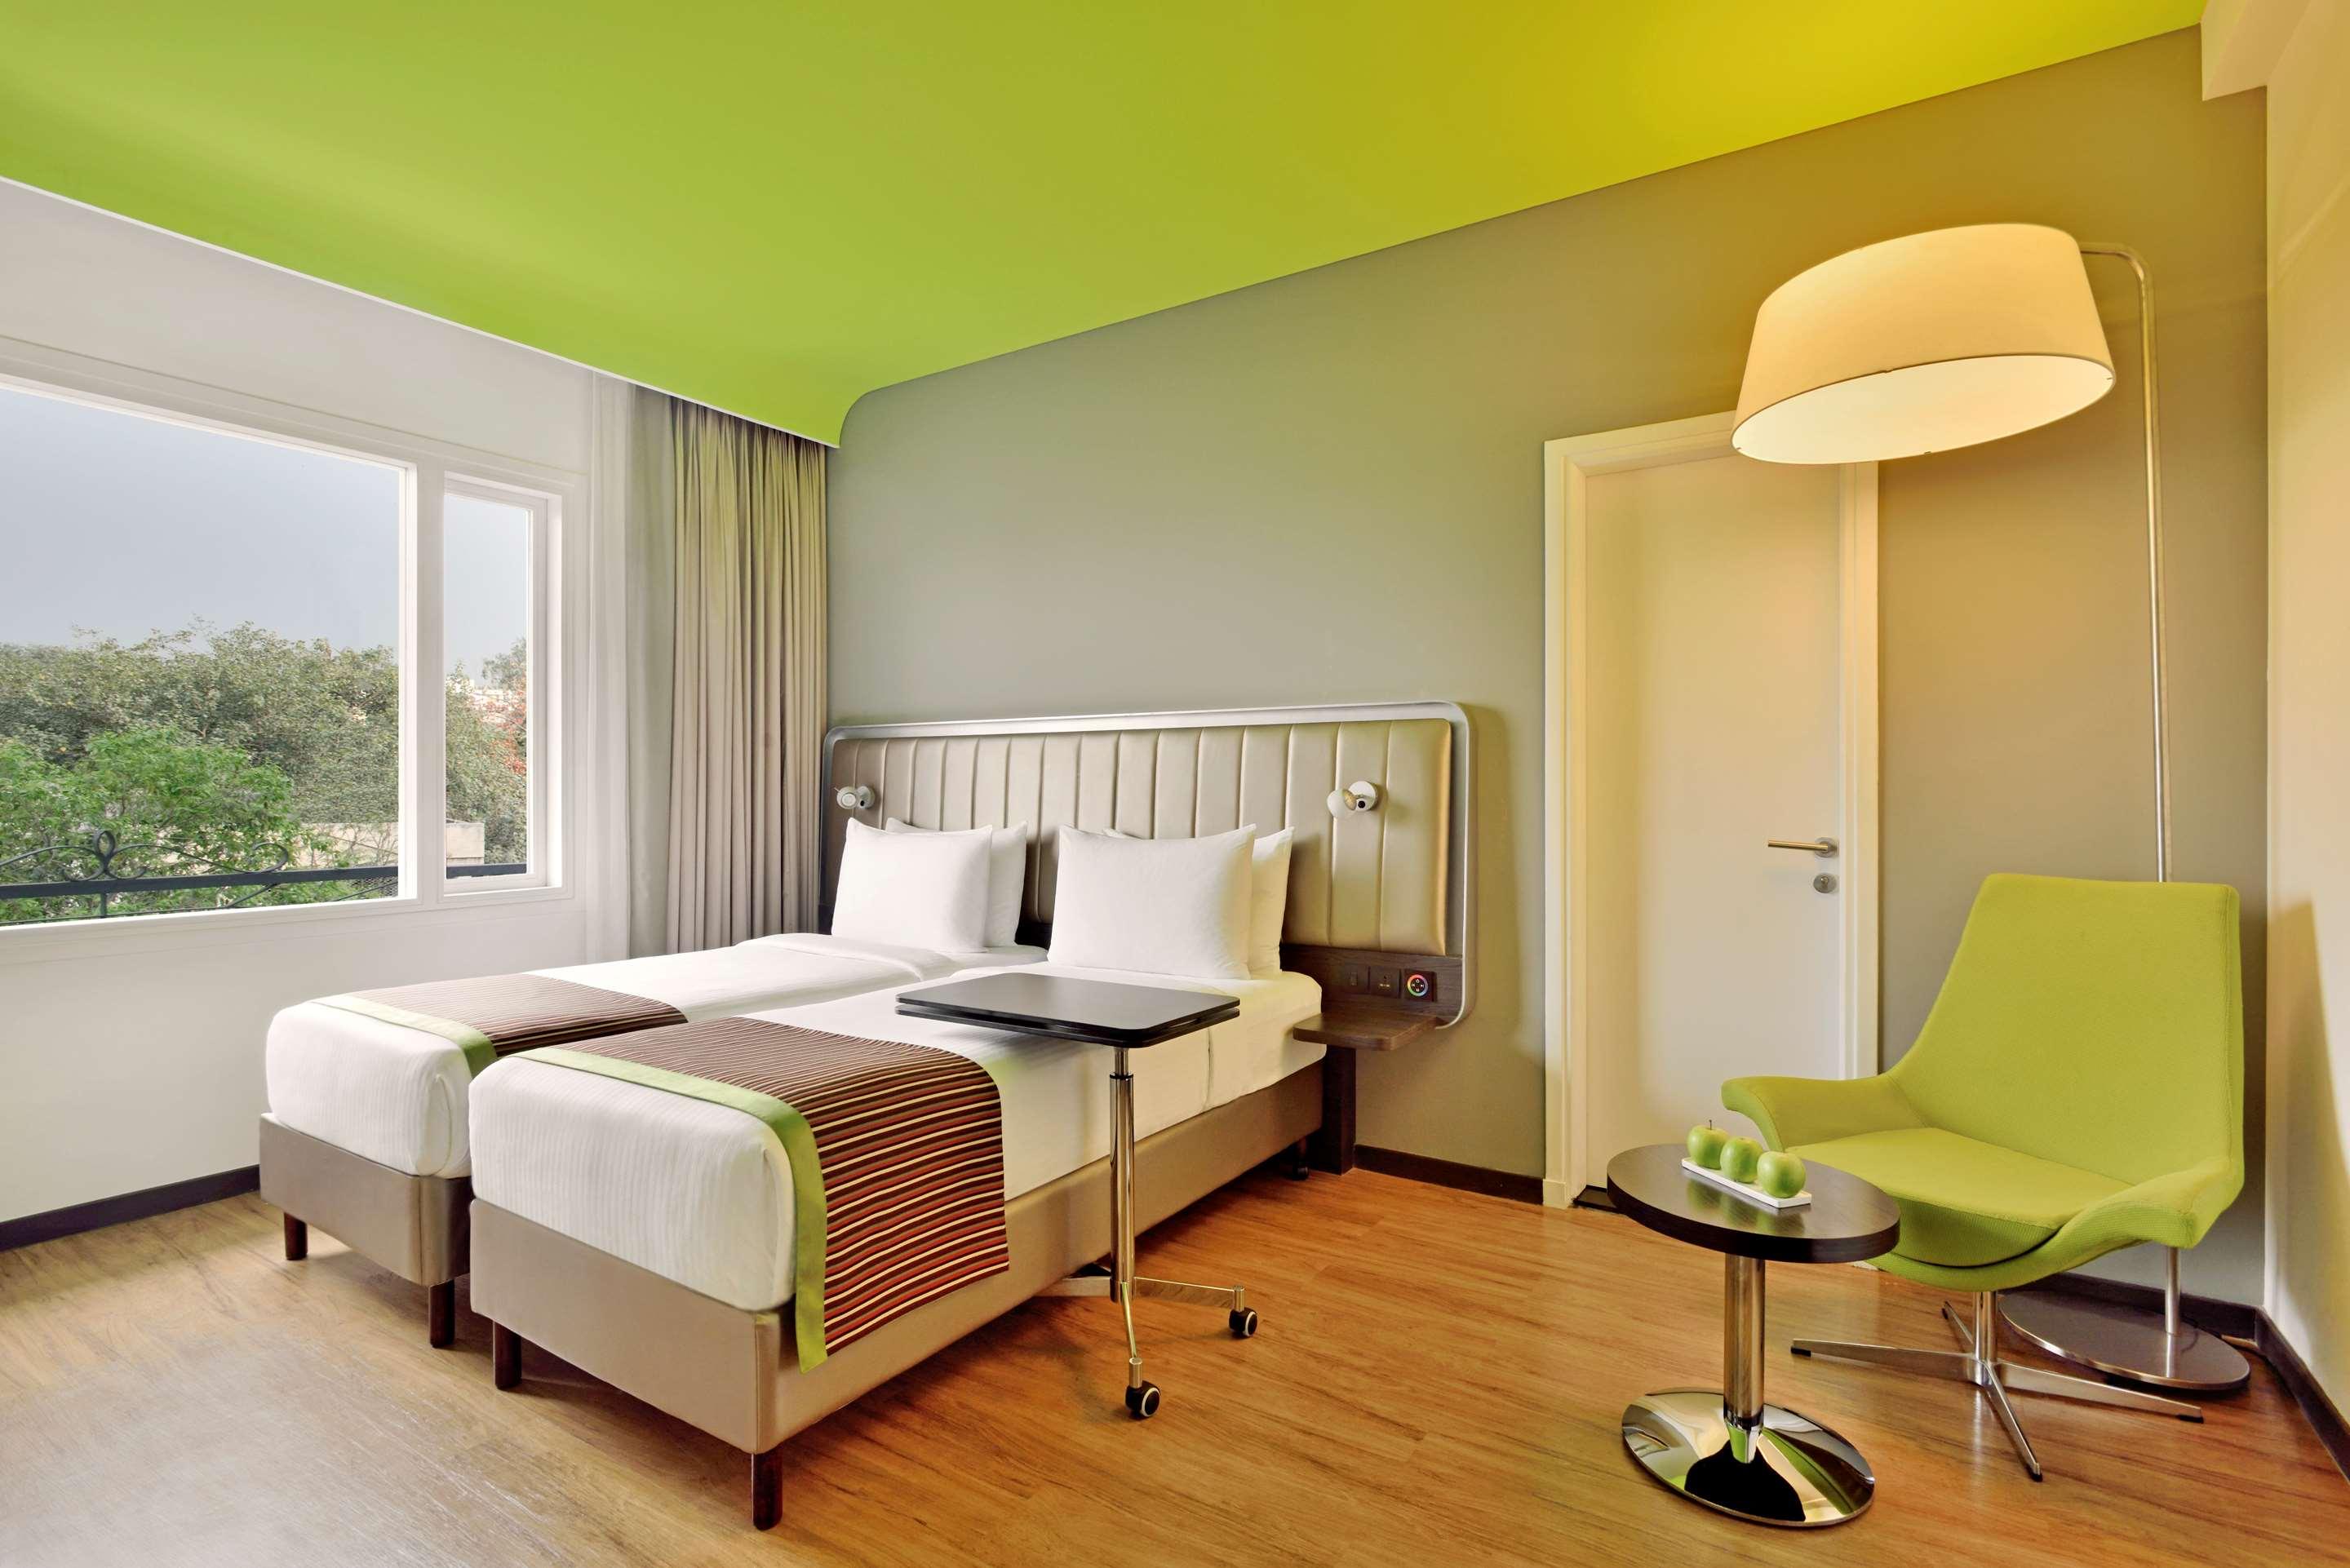 Karon Hotel - Lajpat Nagar in Delhi | Best Rates & Deals on Orbitz